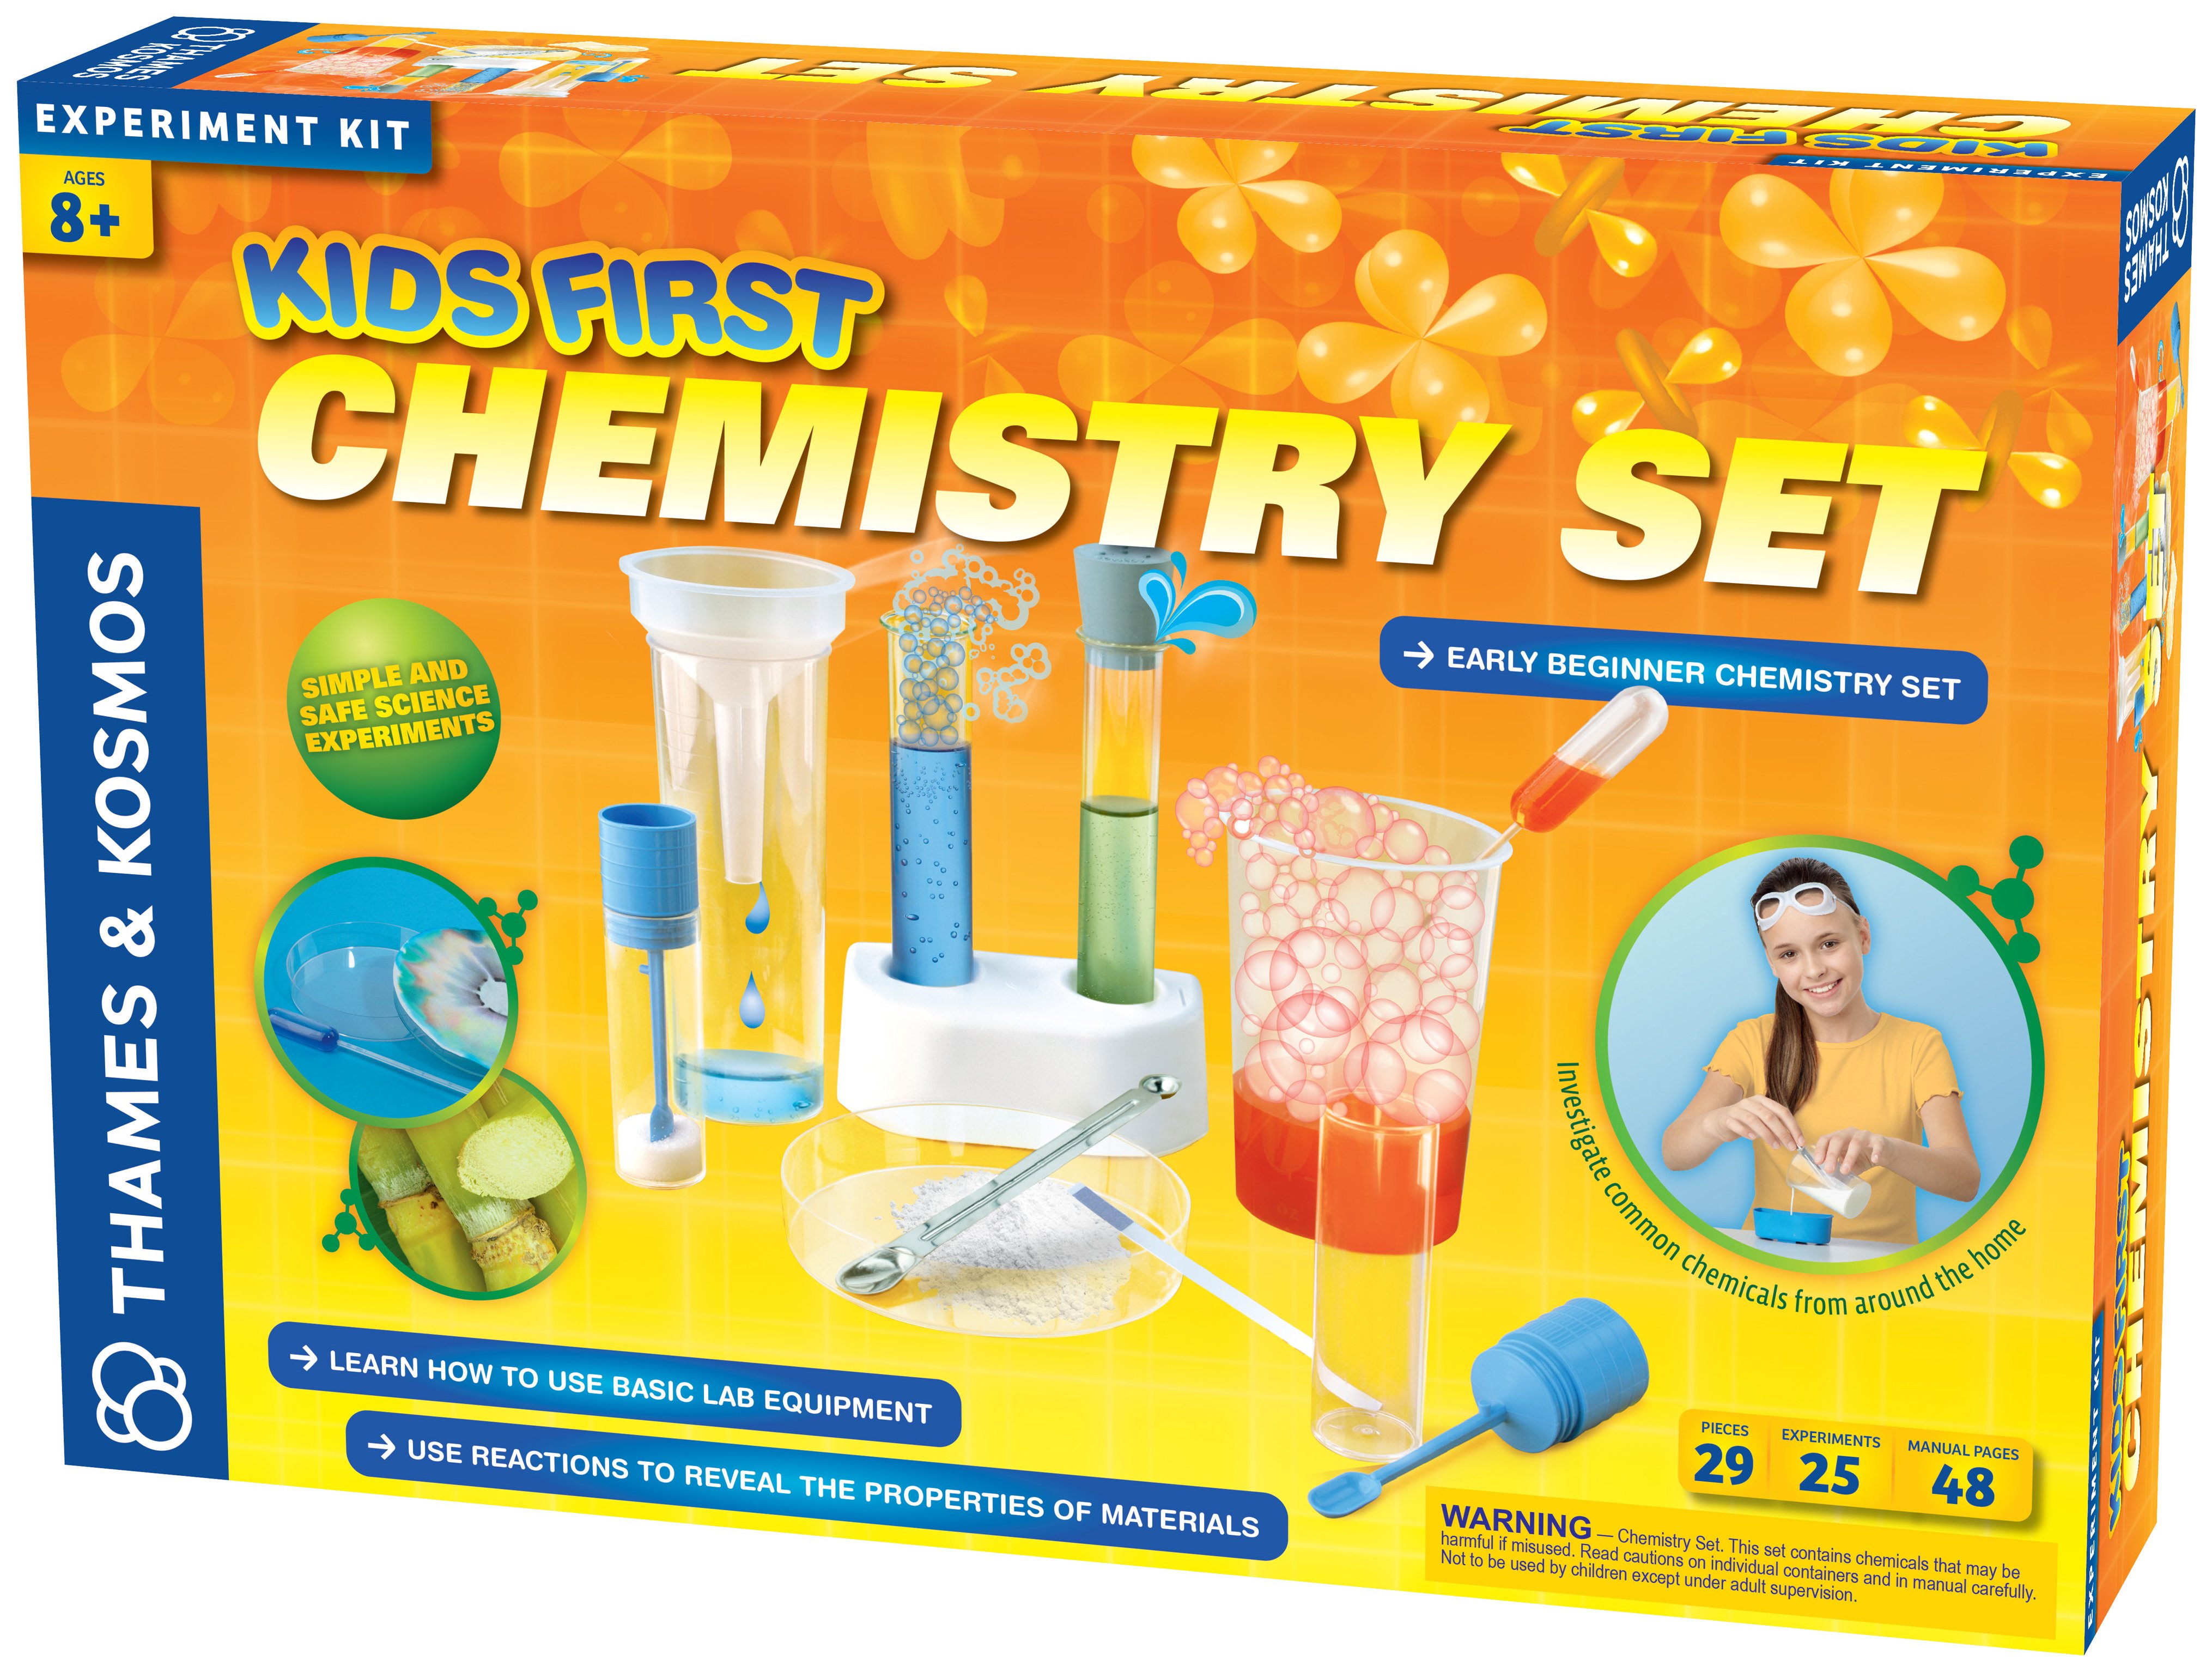 Kid's 1st Chemistry Set Review